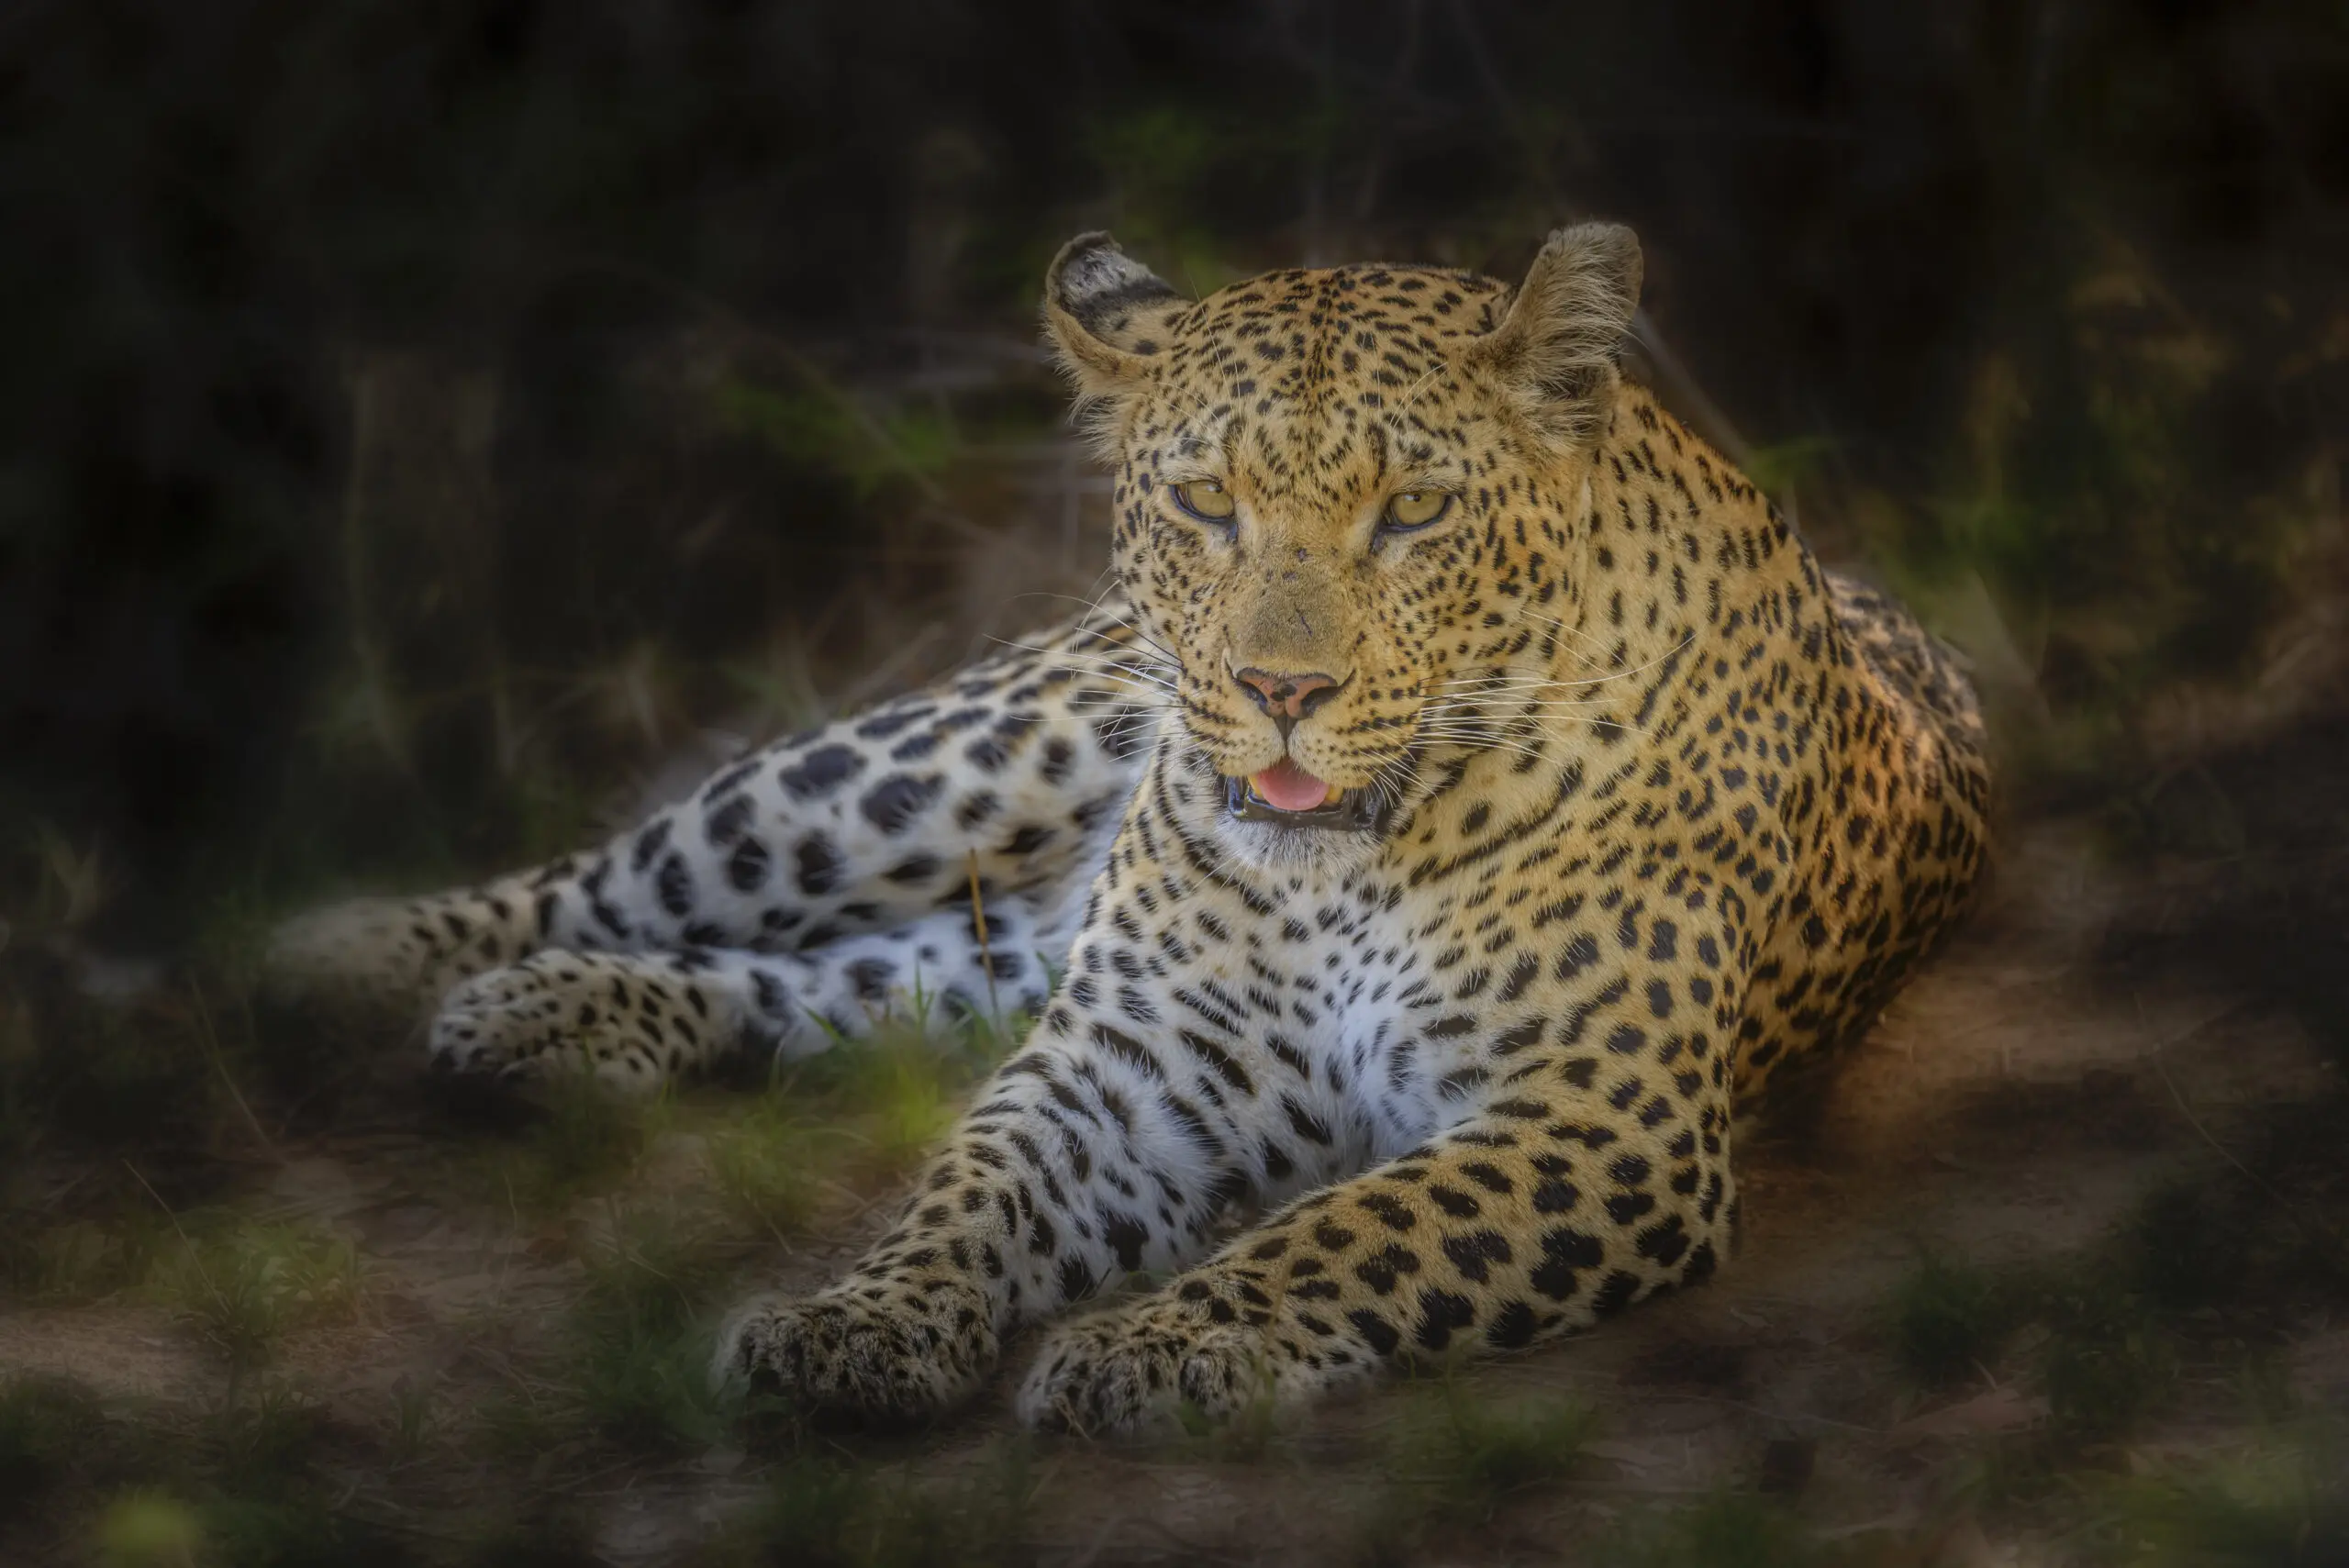 Wandbild (3723) African Leopard präsentiert: Tiere,Natur,Wildtiere,Aus Afrika